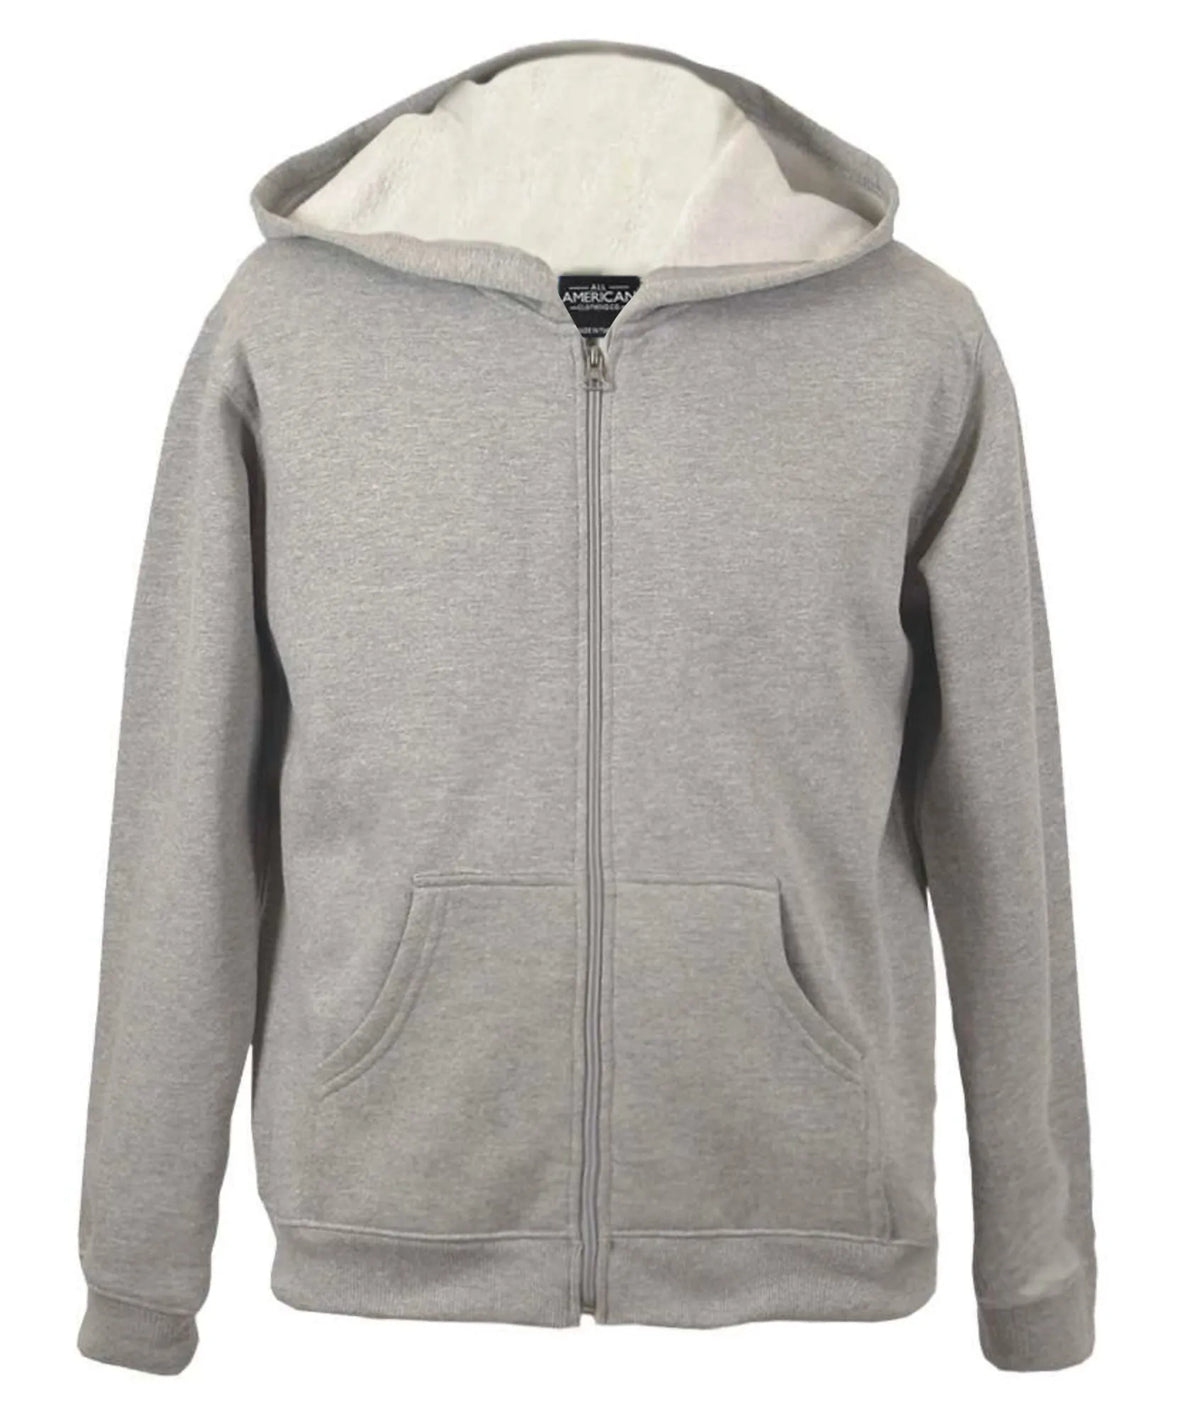 Full Zip Hooded Sweatshirt | All American Clothing Co.